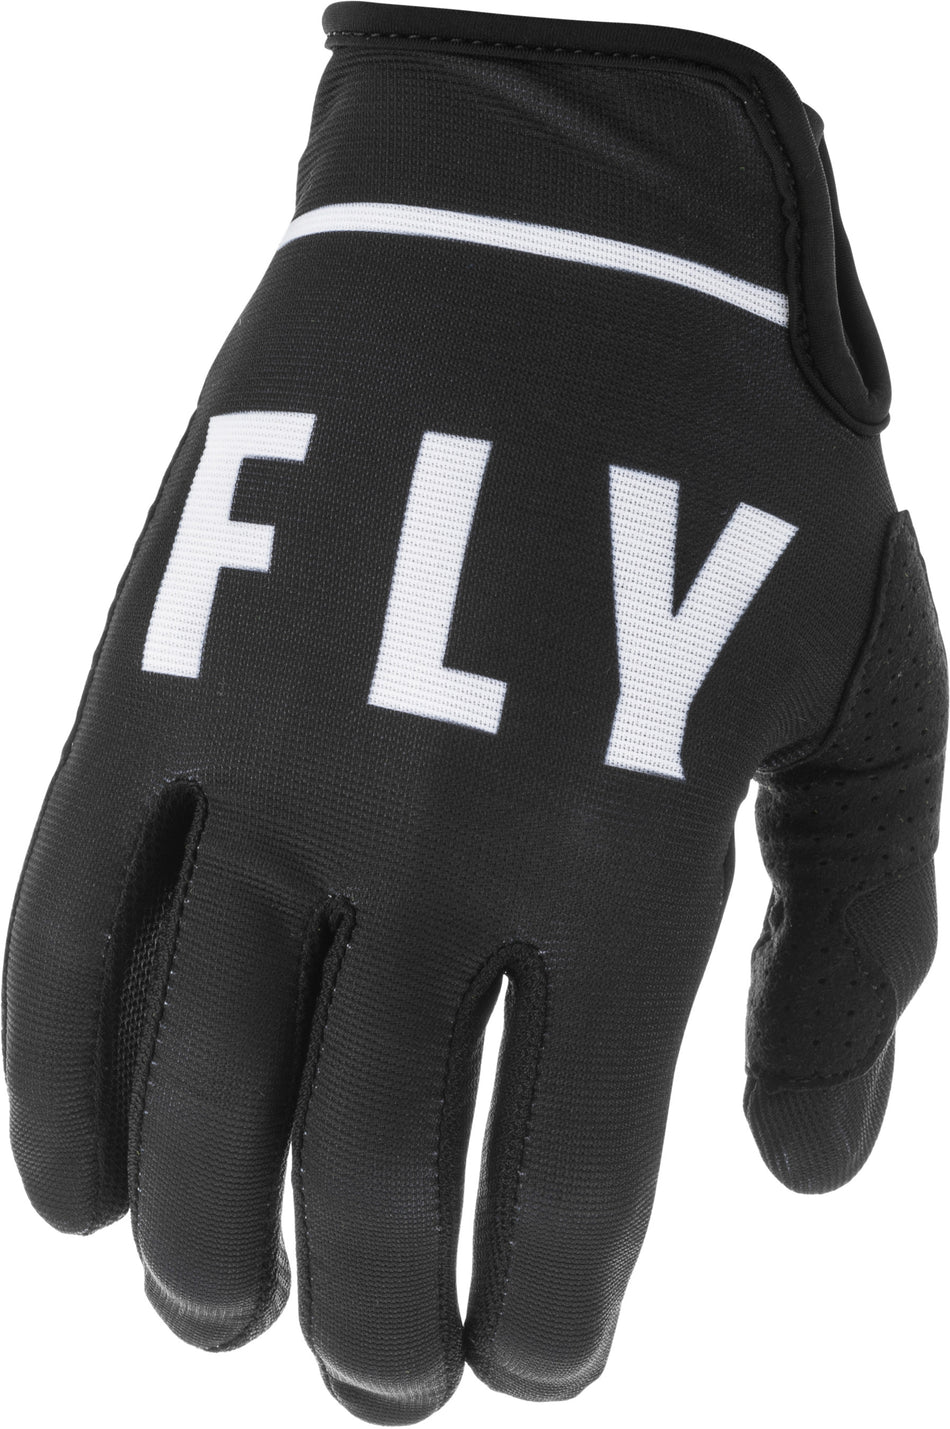 FLY RACING Lite Gloves Black/White Sz 08 373-71108